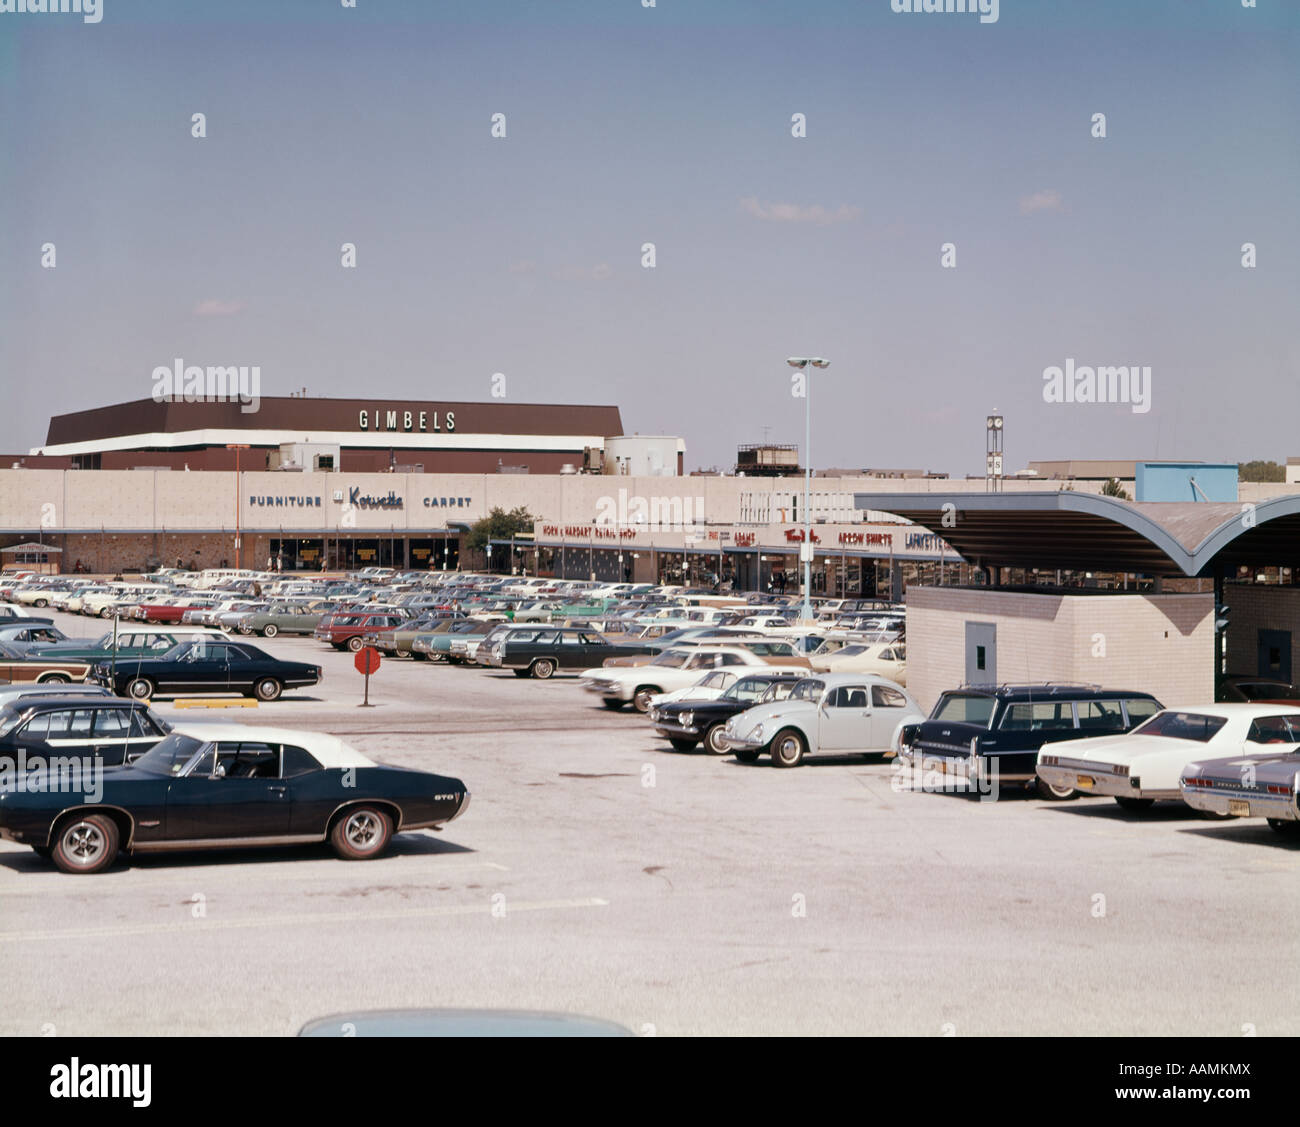 1970 VOITURES PARKING CENTRE COMMERCIAL DE BANLIEUE GIMBELS MAGASIN King of Prussia Mall MAGASINS VINTAGE RETRO PA Banque D'Images